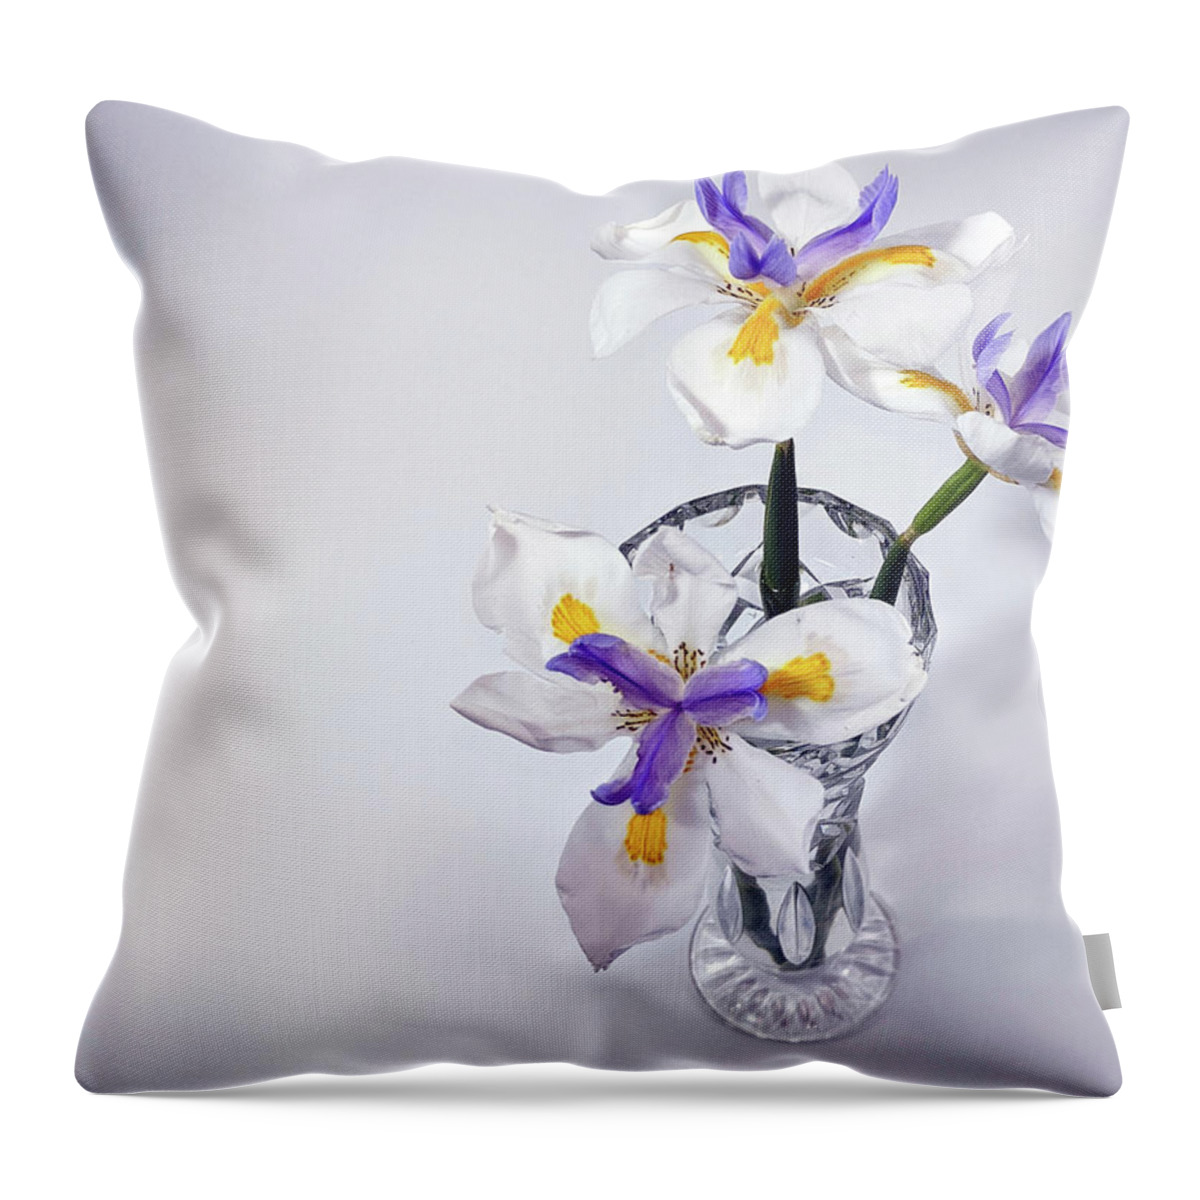 Wild Iris Flower Throw Pillow featuring the photograph Wild Iris in glass vase. by Geoff Childs